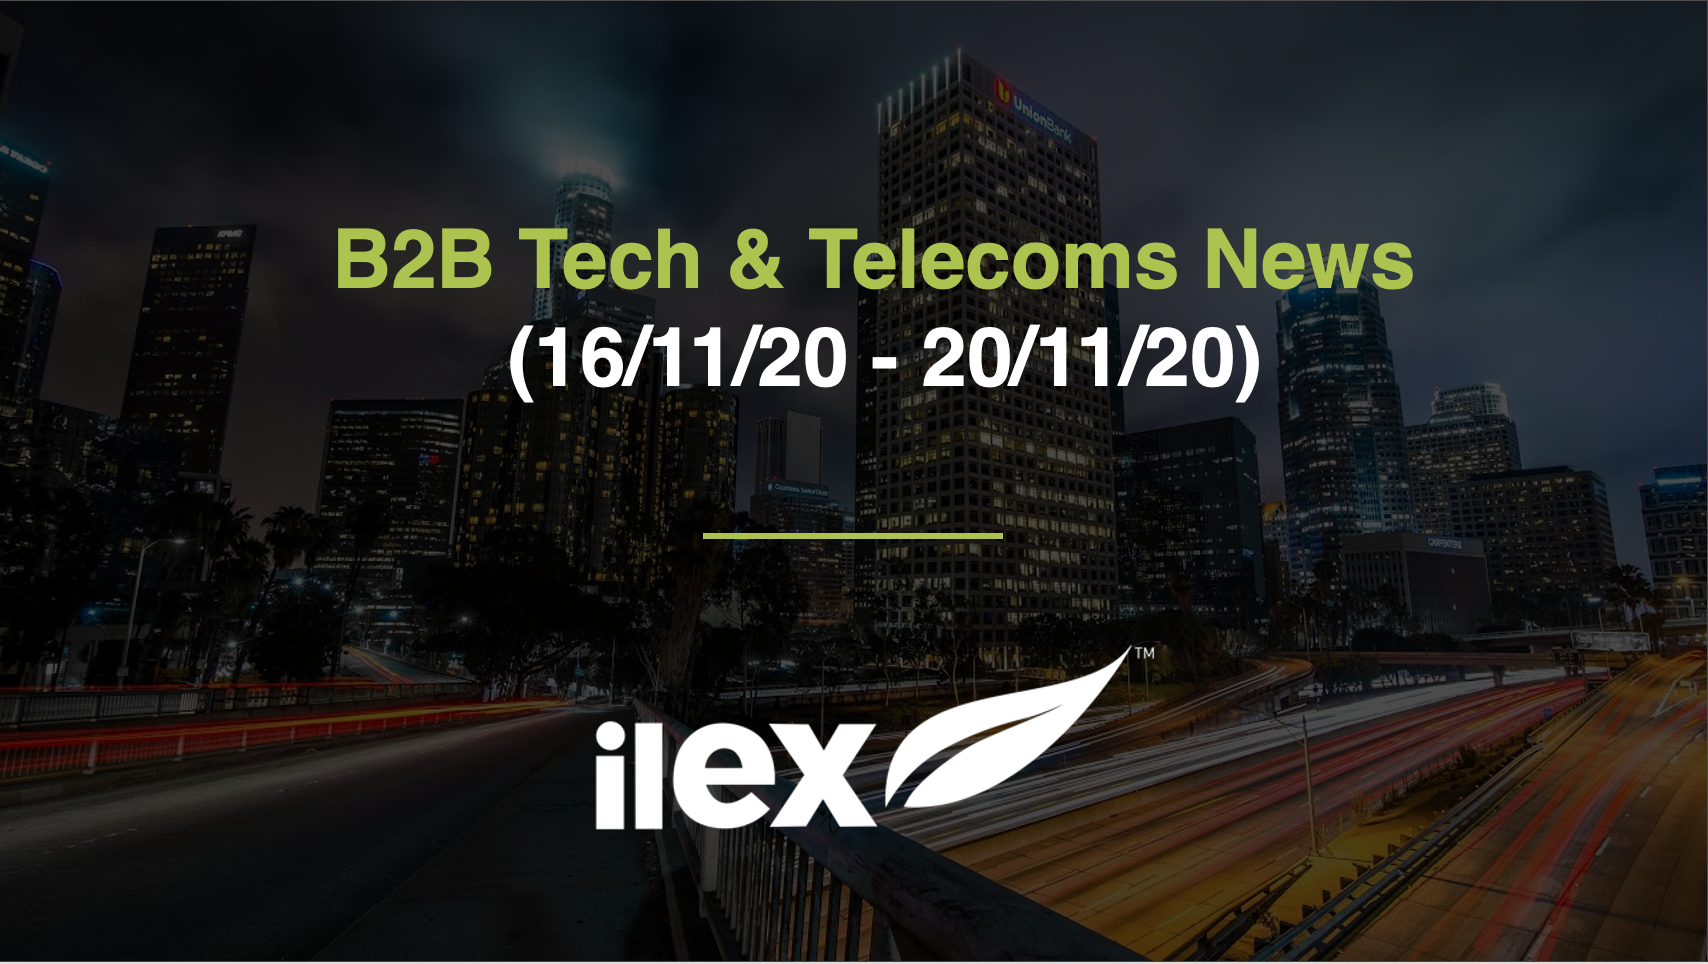 B2B TECH & TELECOMS NEWS (16/11/20 - 20/11/20)